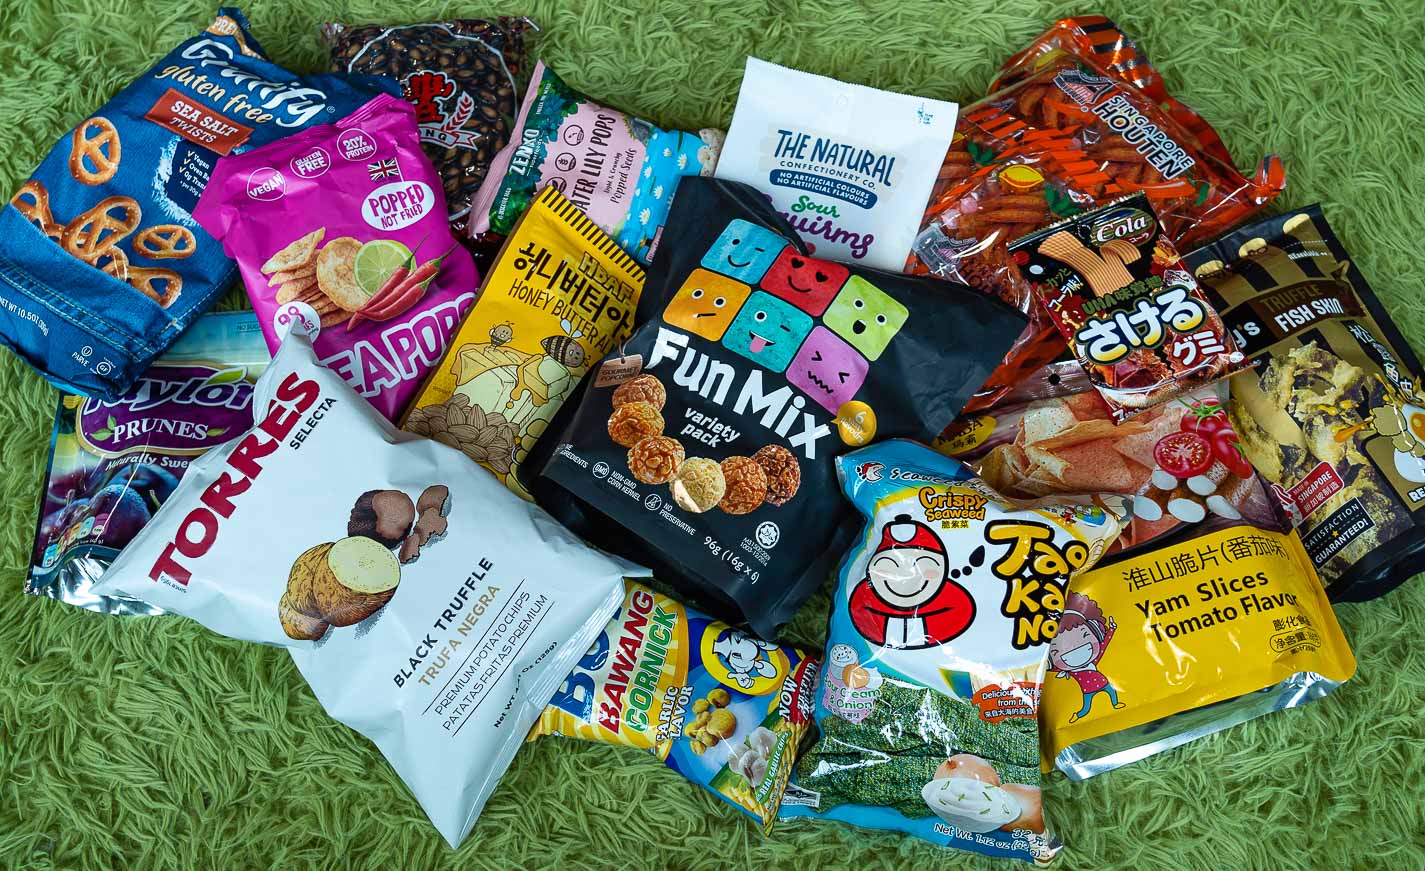 International Snack Blog - World of Snacks